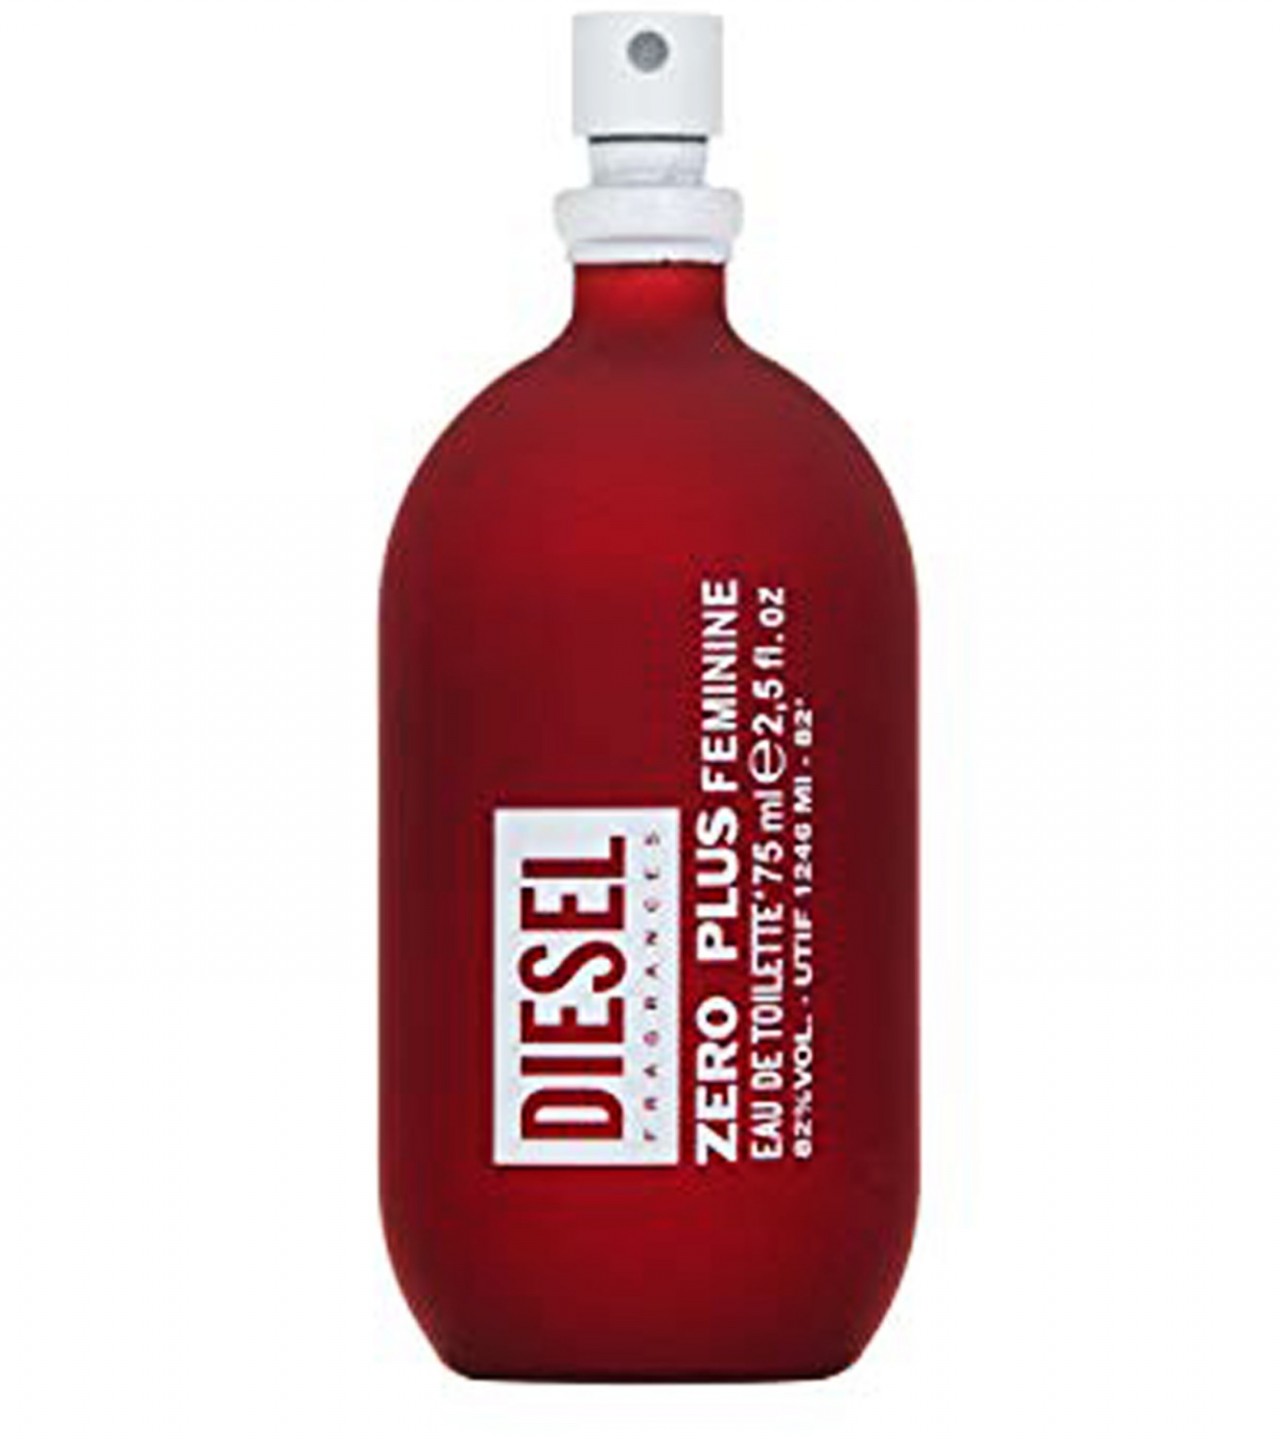 Diesel Zero Plus Perfume for Women - Eau de Toilette Spray 2.5 oz - 75 ml